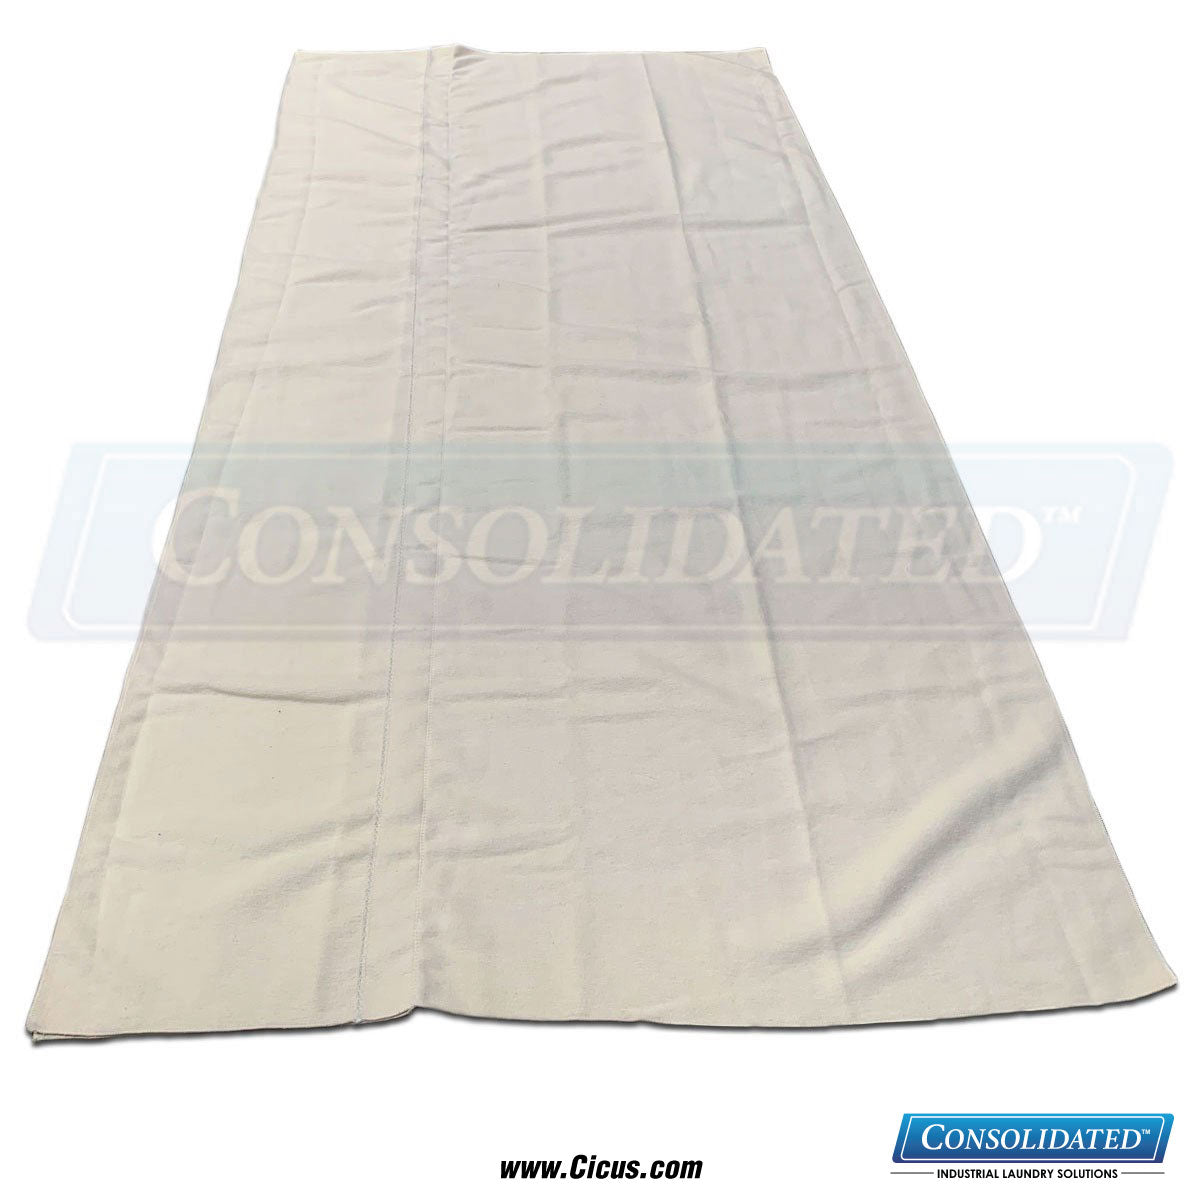 Ironer Wax Cloth - Flannel Blend, 54" x 120" [318]